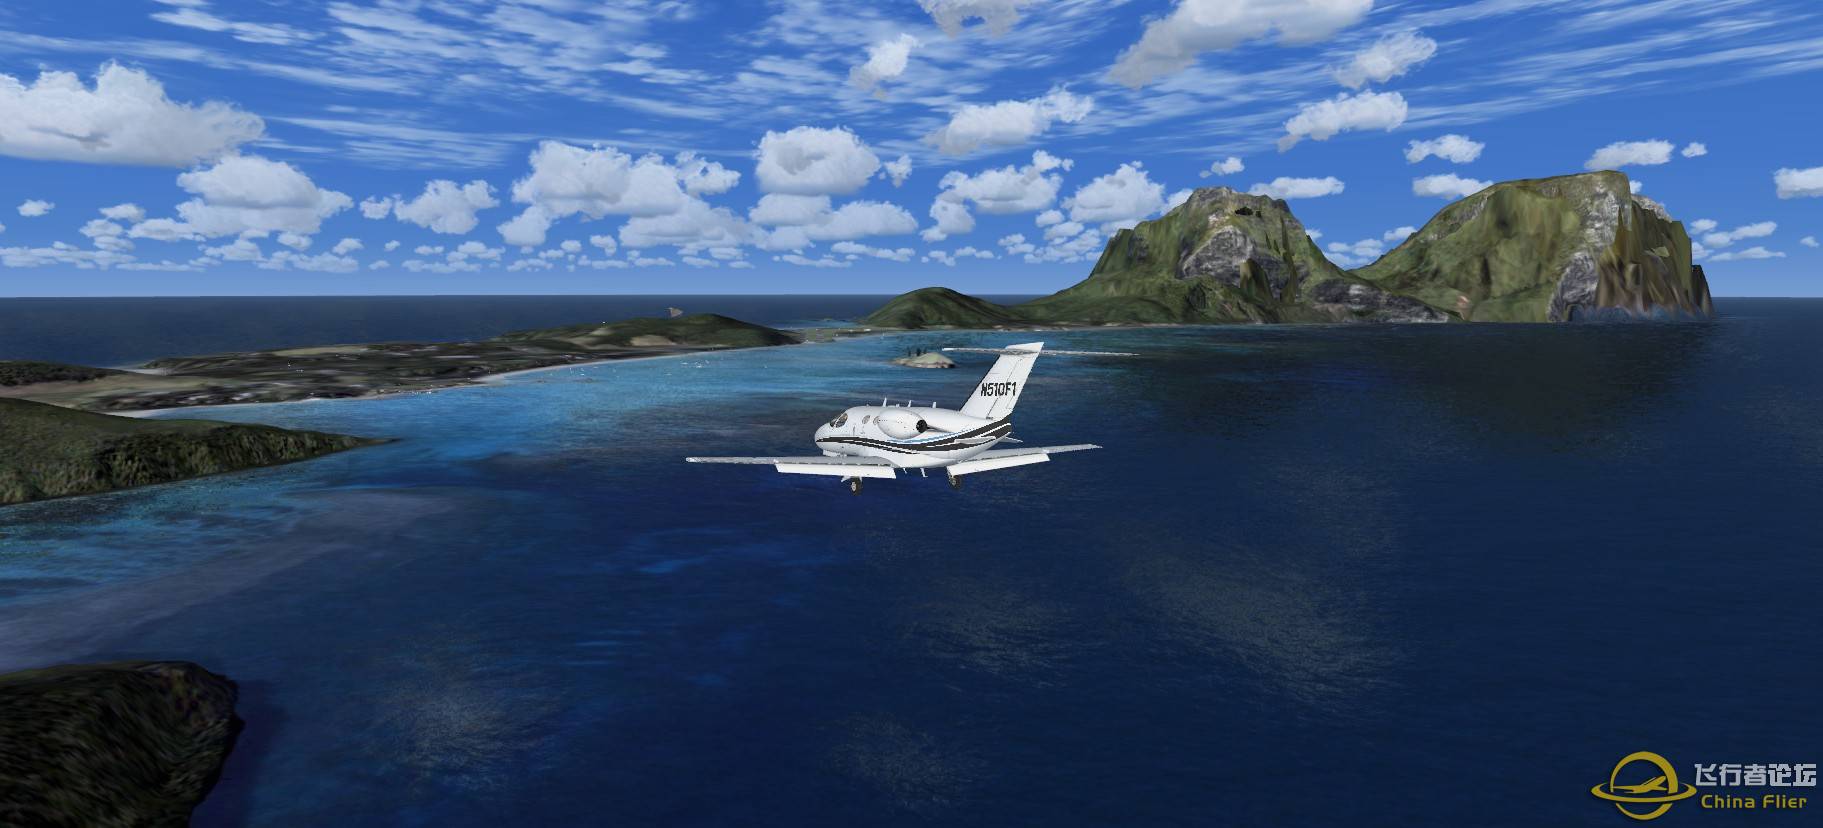 Aerosoft Lord Howe Island 紧邻澳洲的小岛-9839 